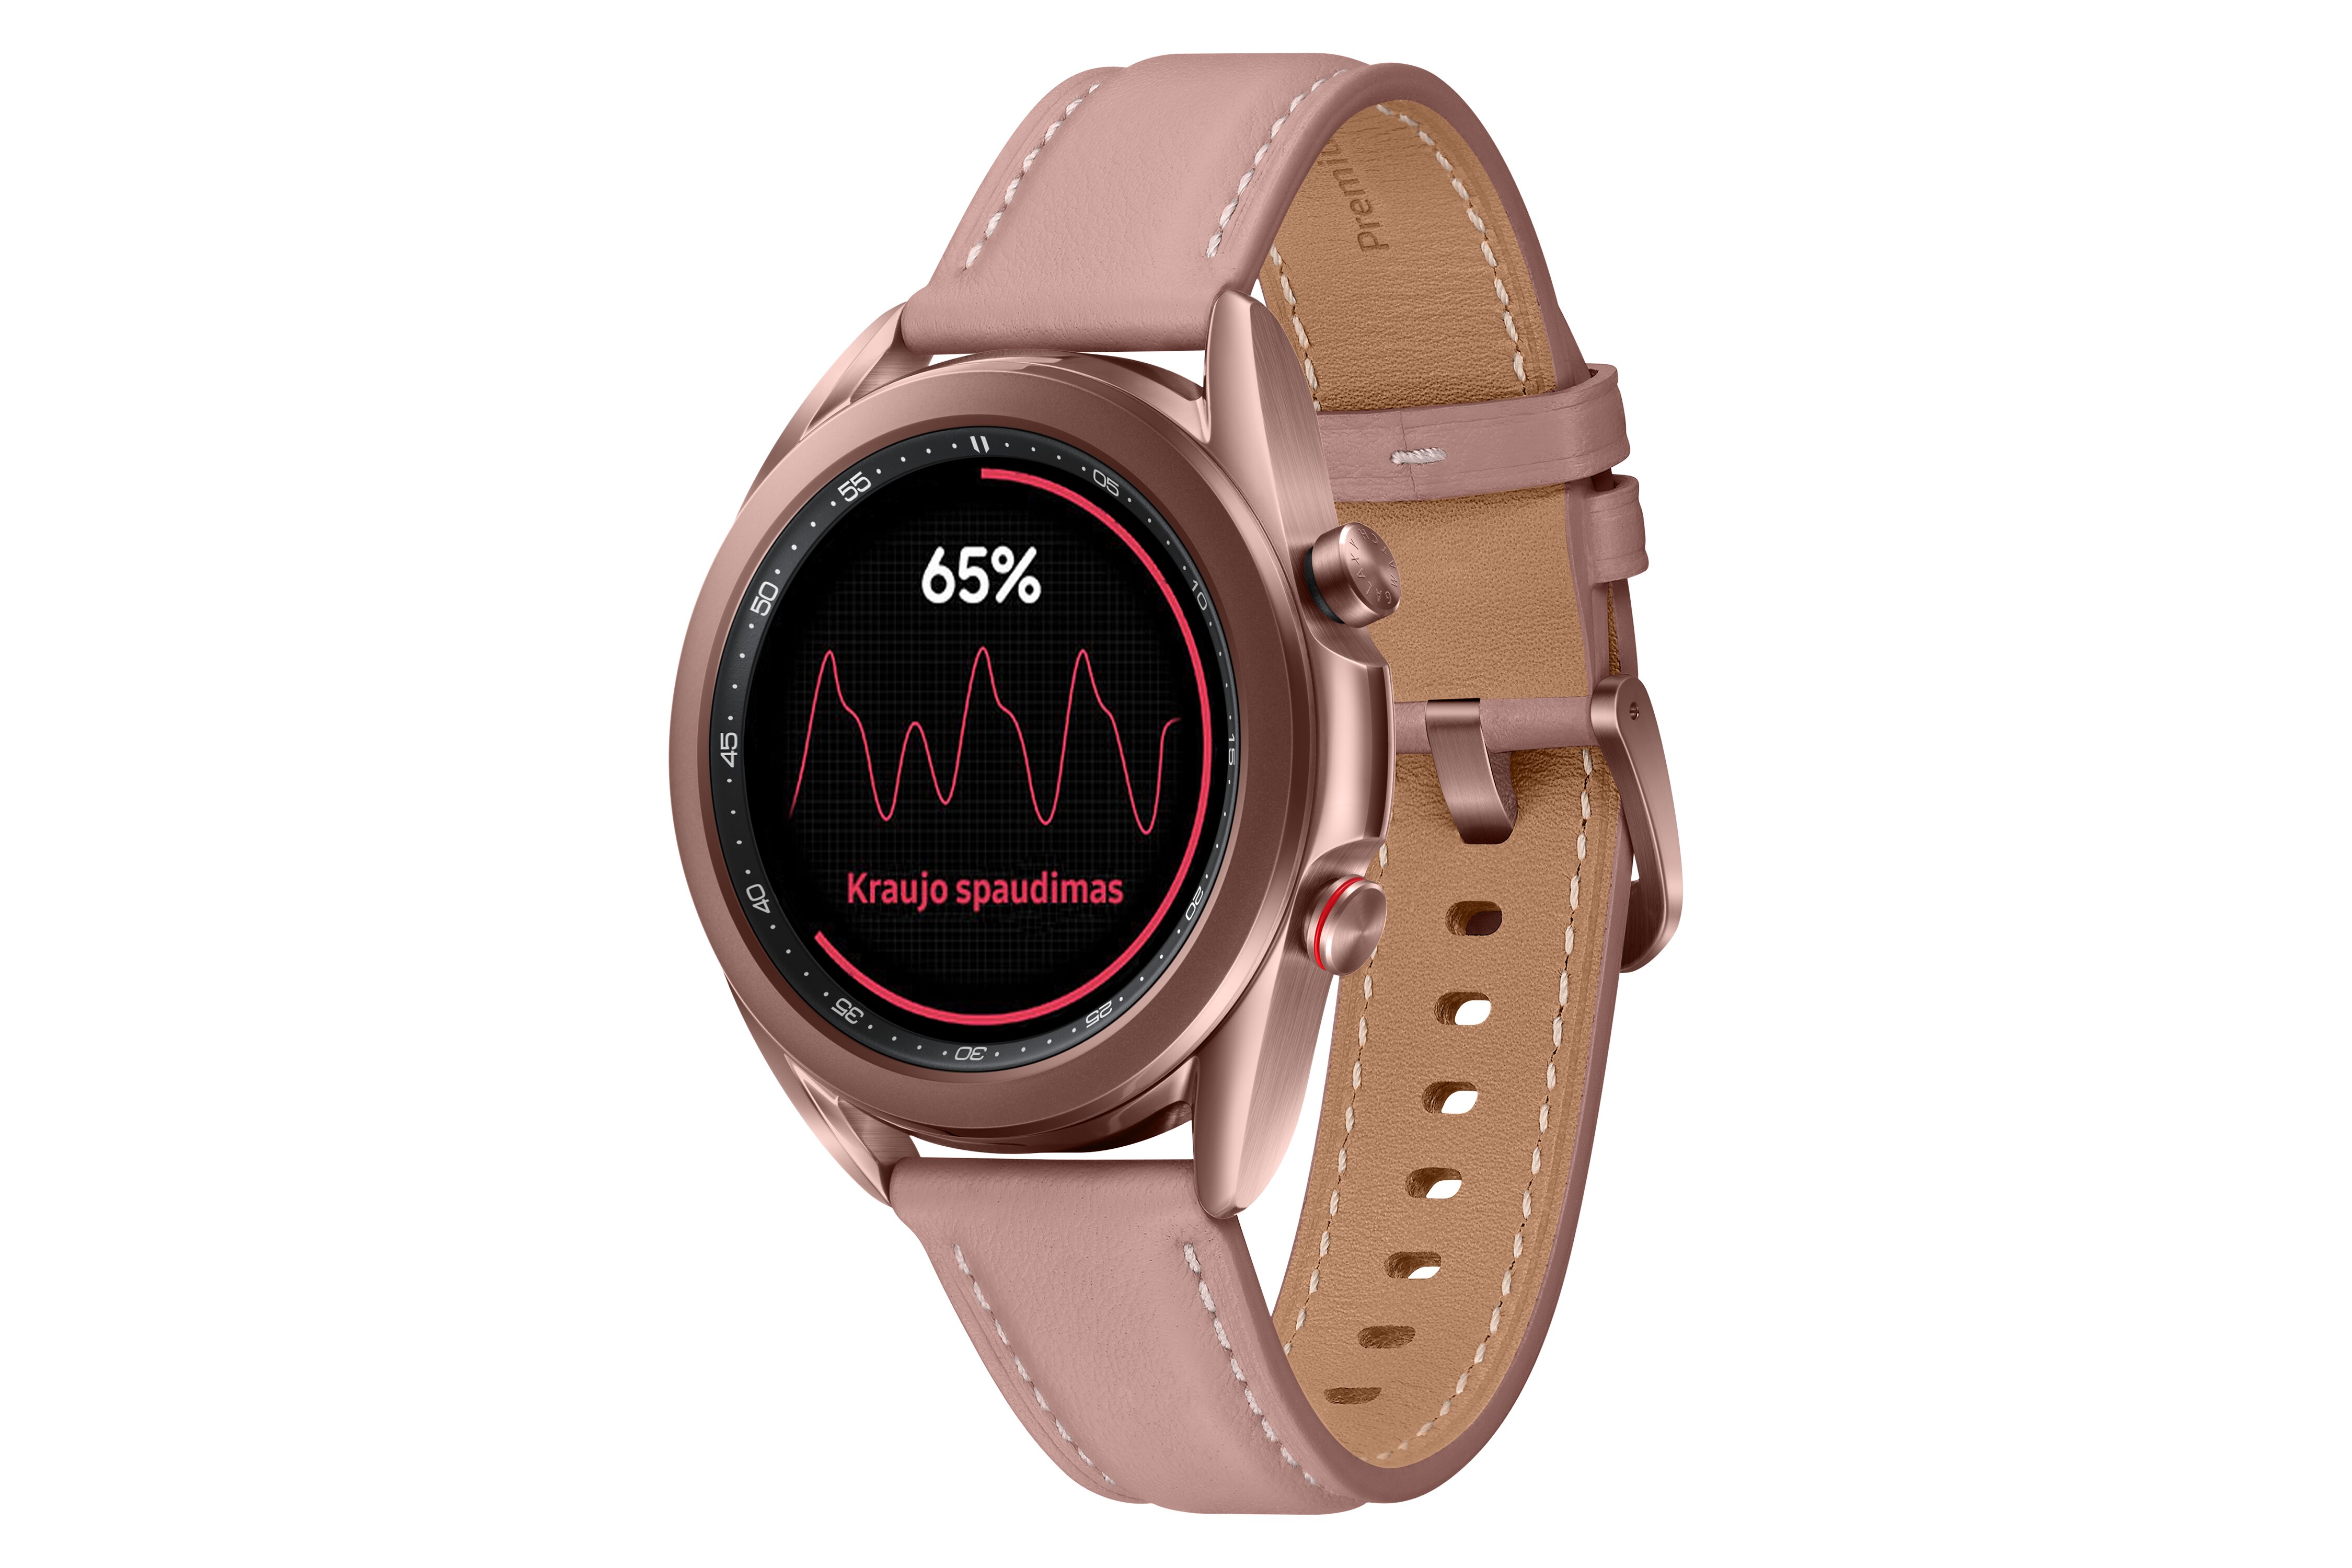 Išmanusis laikrodis Išmanusis laikrodis Samsung Galaxy Watch 3 LTE (41 mm)  kaina | pigu.lt